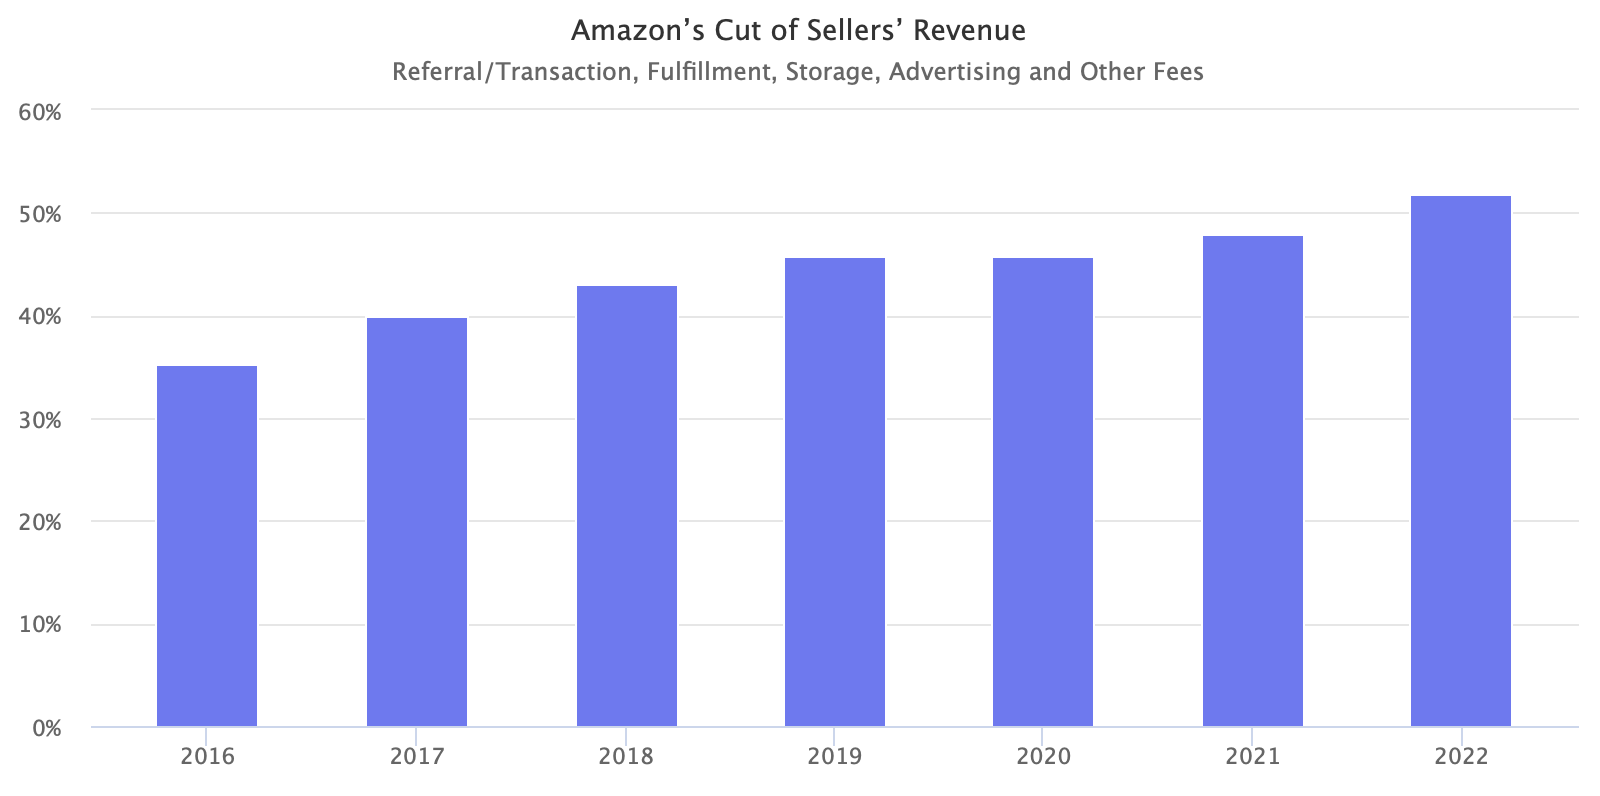 Amazon’s Cut of Sellers’ Revenue